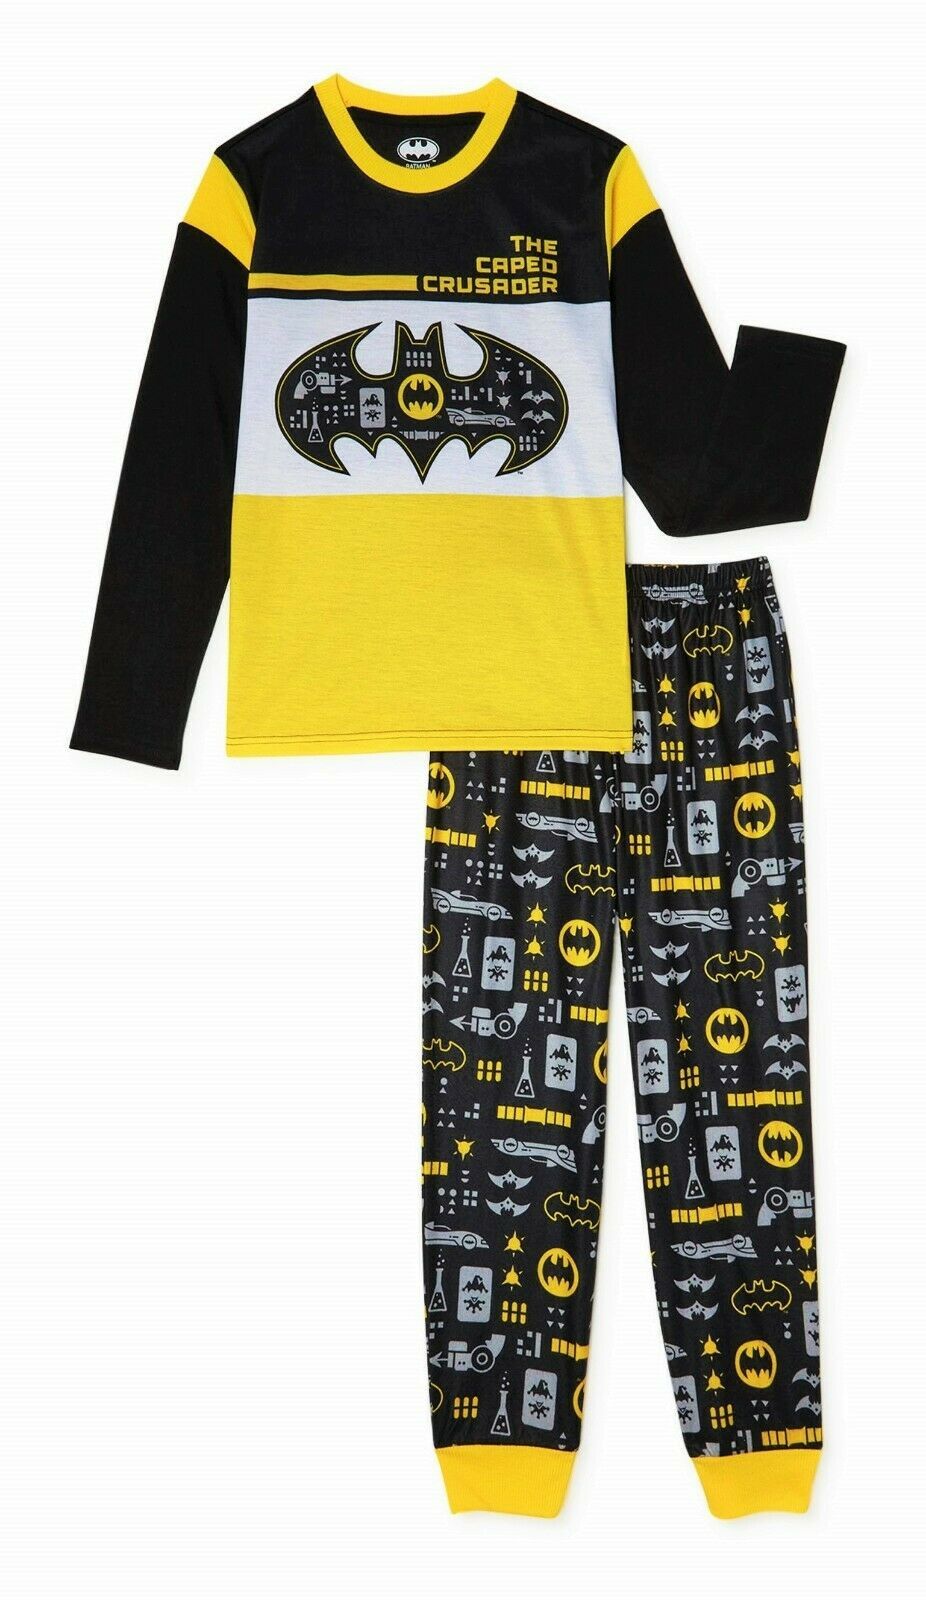 BATMAN CAPED CRUSADER Pajamas Sleepwear Set w/Fleece Pants NWT Boys Size 4-5 $32